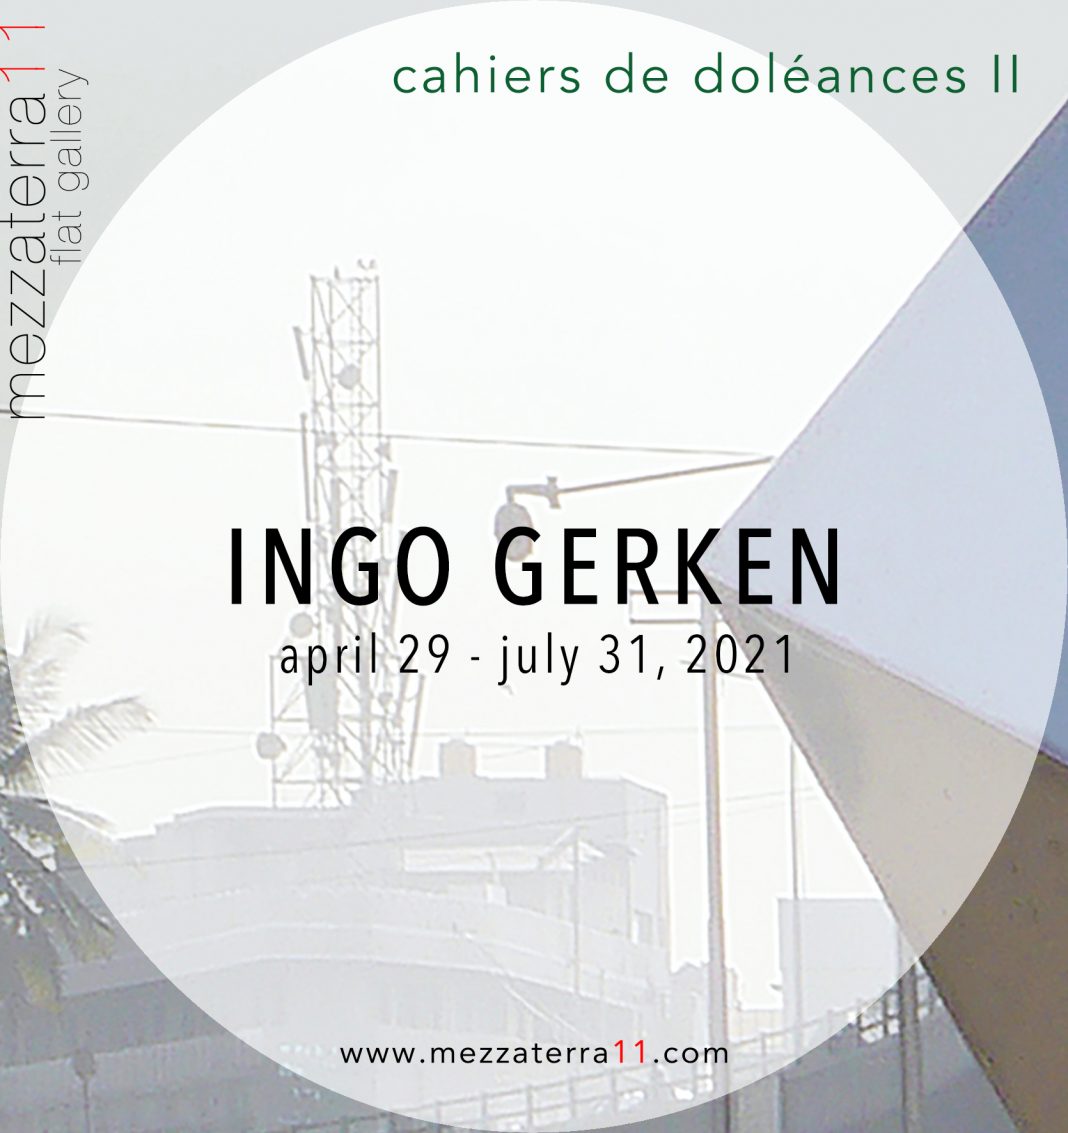 Ingo Gerken – Cahiers de doléances IIhttps://www.exibart.com/repository/media/formidable/11/img/53a/mezzaterra11-flat-gallery_cahiers-de-doléances-II_INGO-GERKEN_e-flyer-1068x1133.jpg